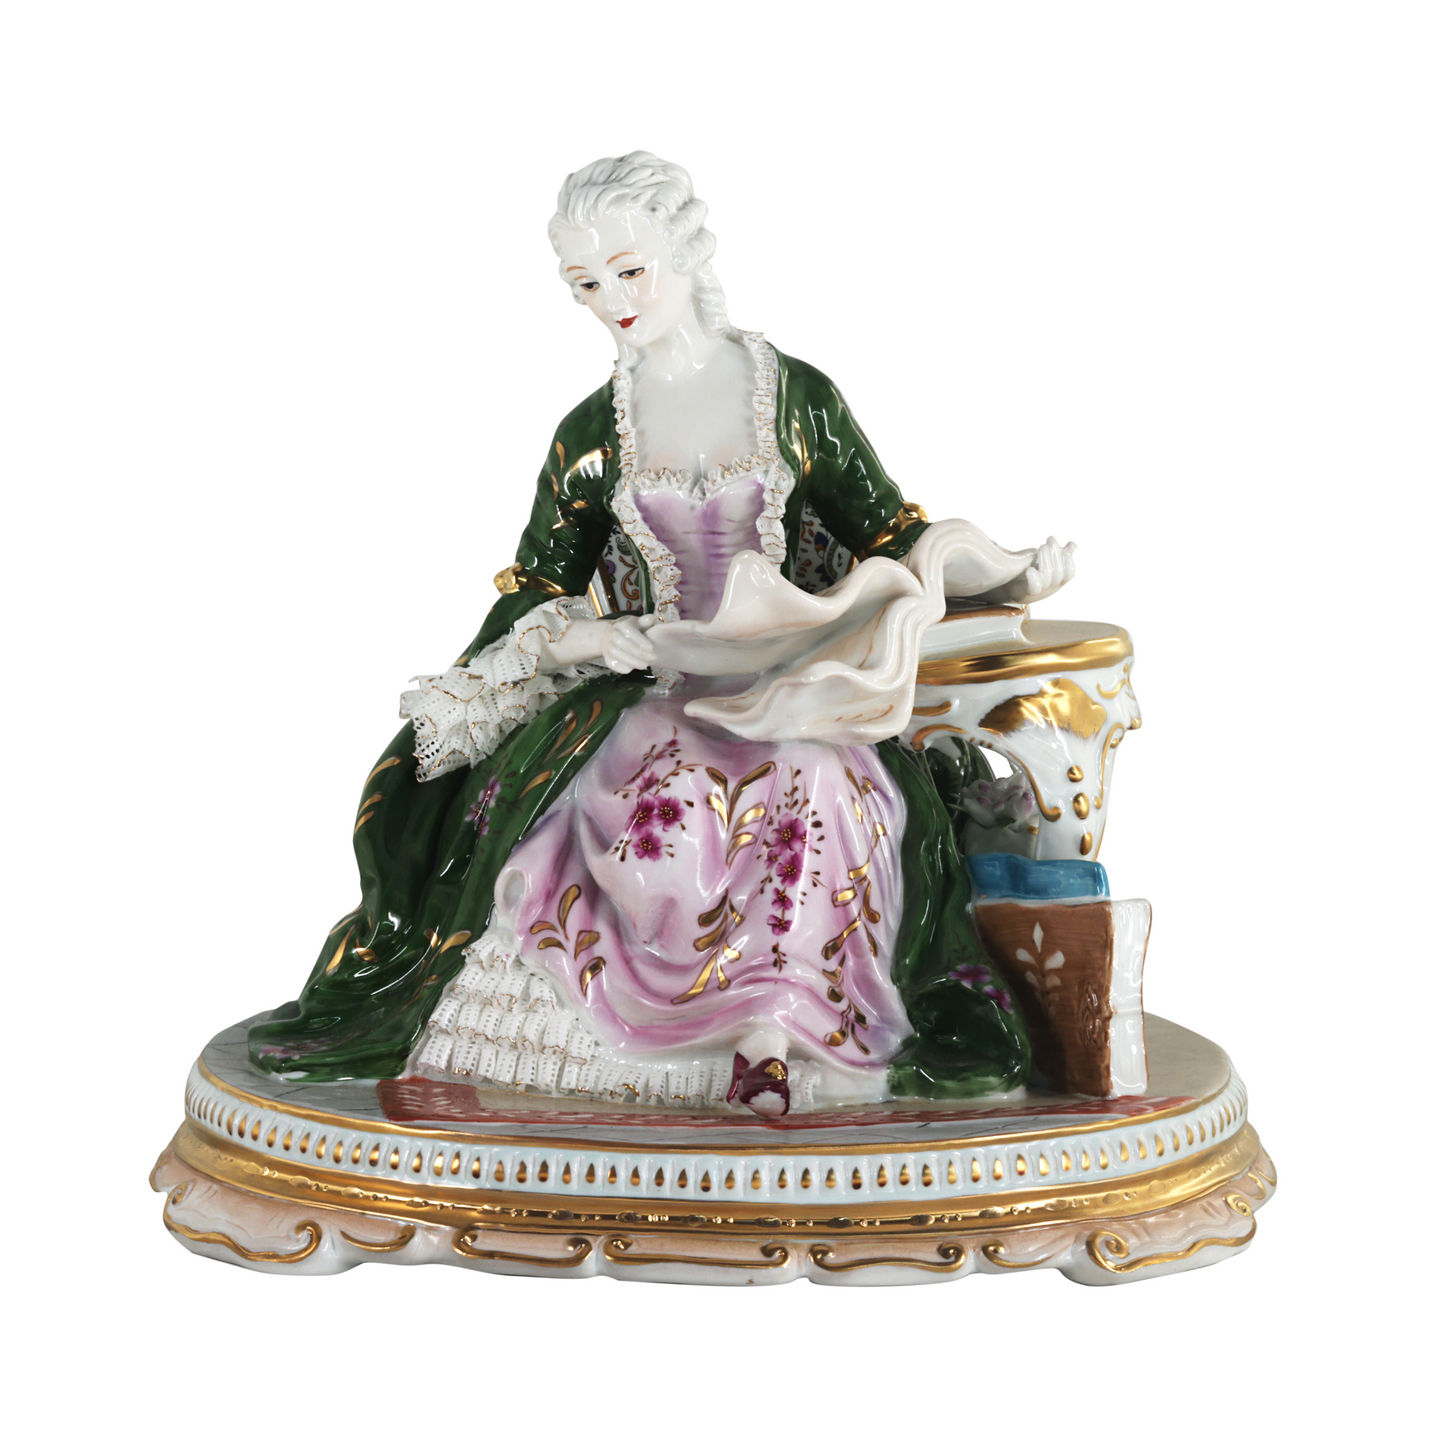 Net Lace Porcelain Reading Lady Figurine